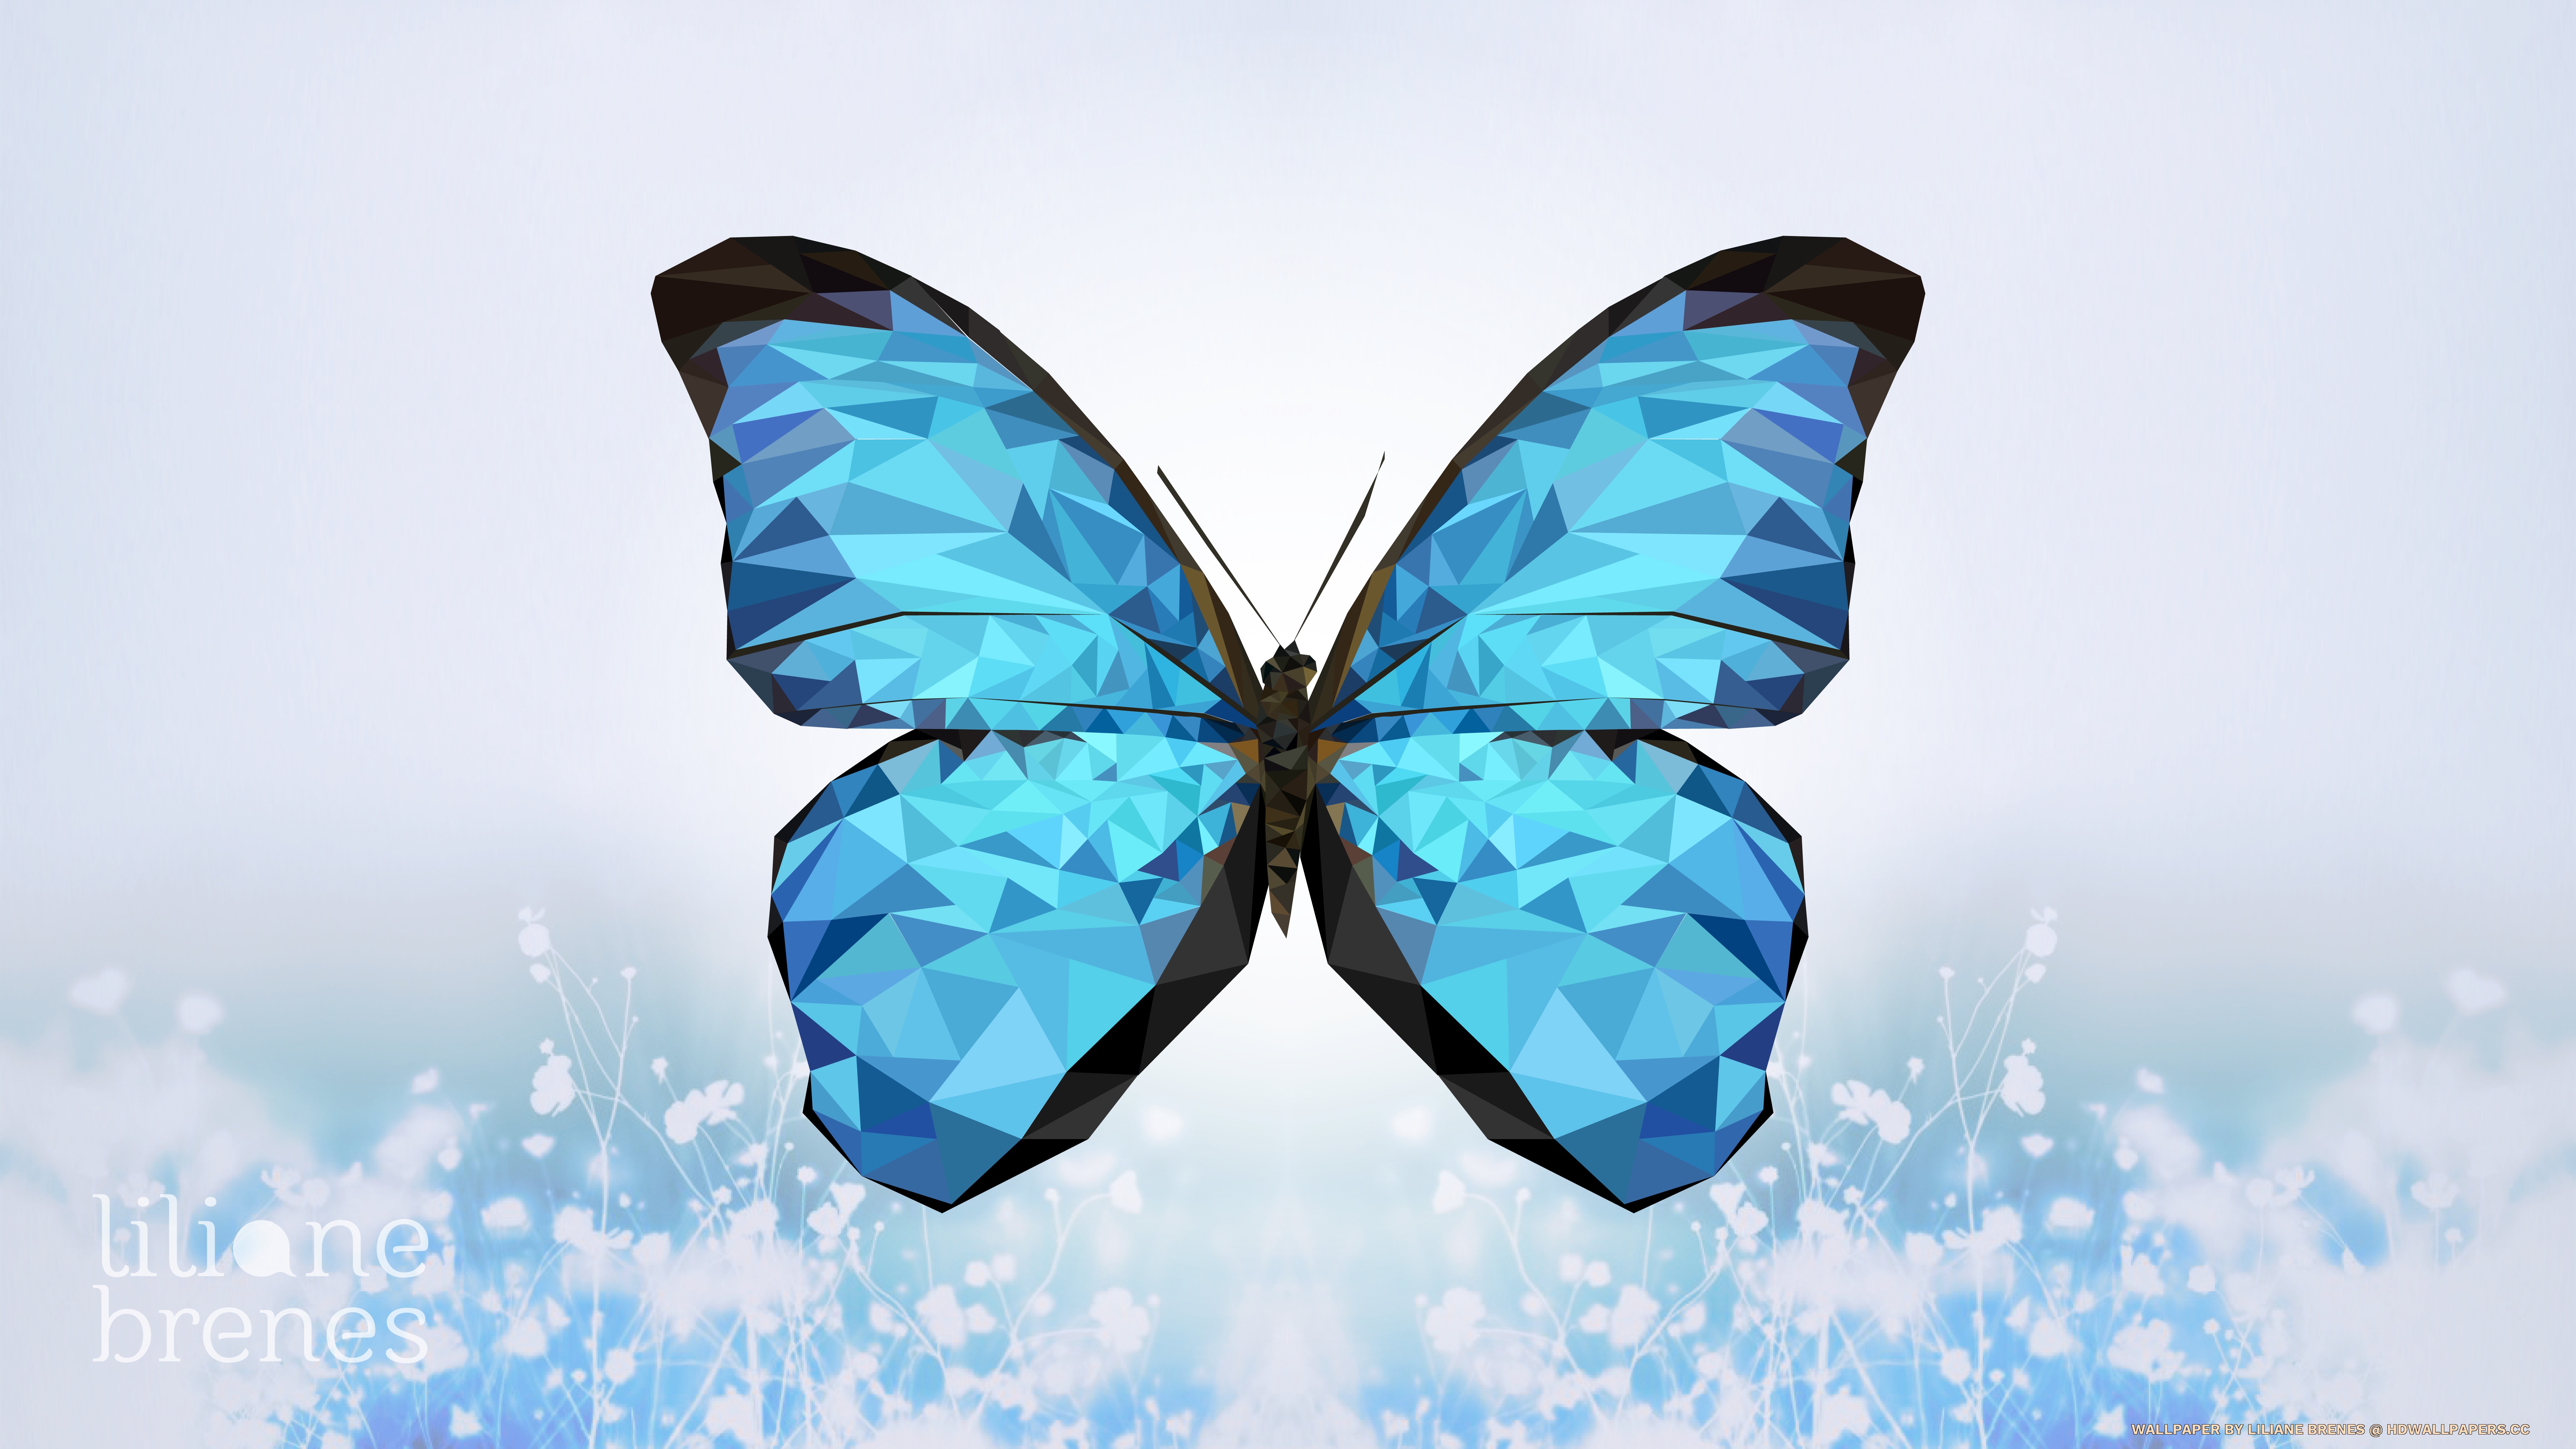 Free Wallpaper Butterfly 02 By Librenes-d9twlxw - Butterfly Hd - HD Wallpaper 